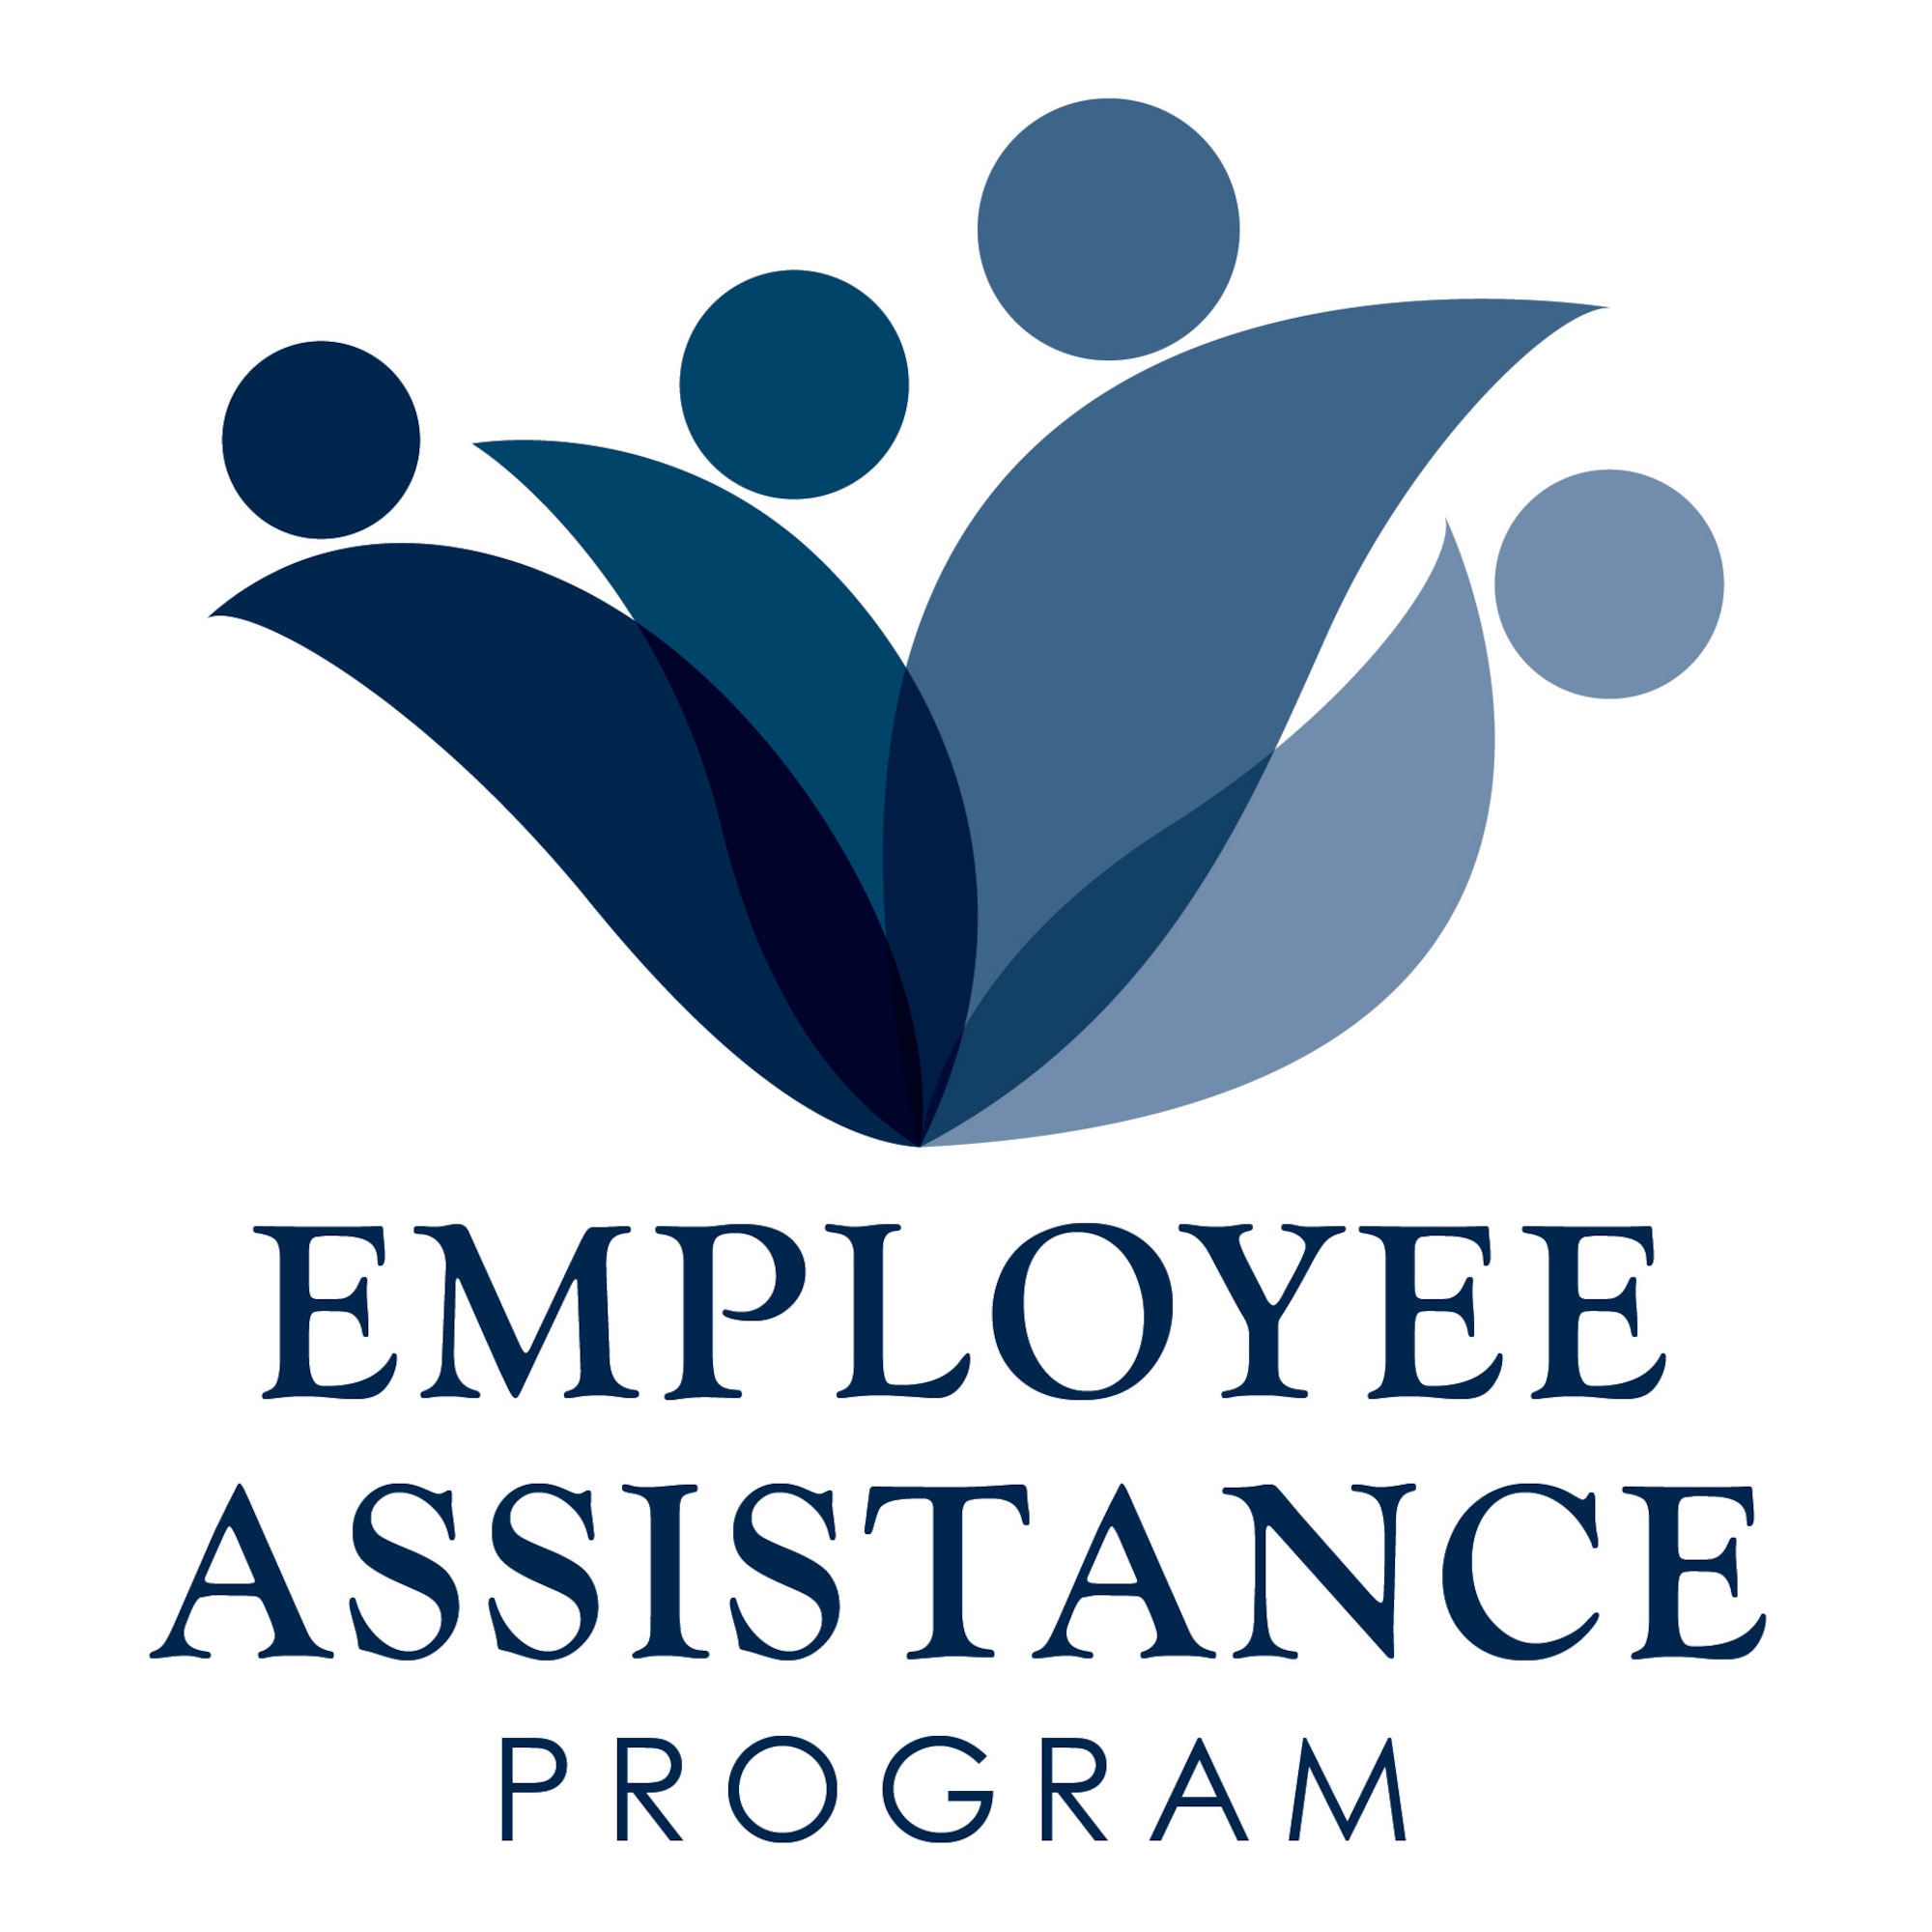 Photo of employee assistance progam logo.